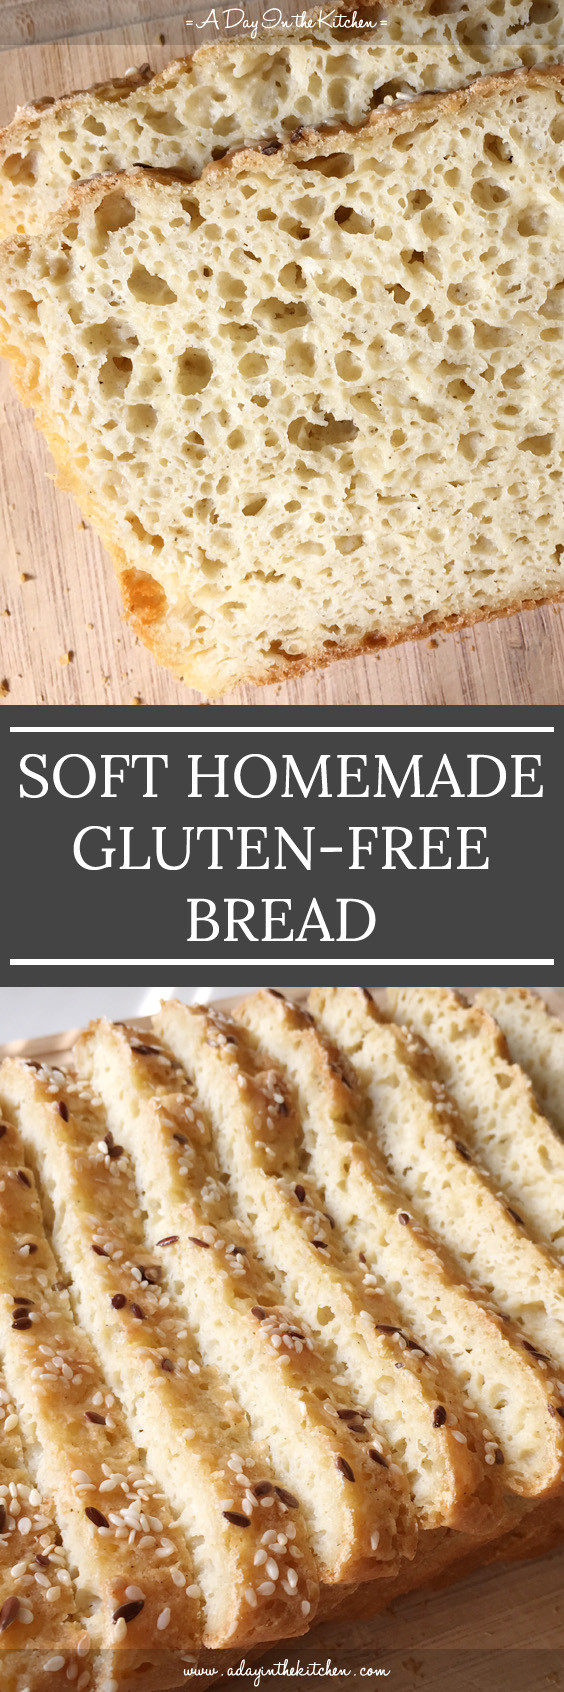 Soft Gluten Free Bread
 Soft Homemade Gluten Free Bread